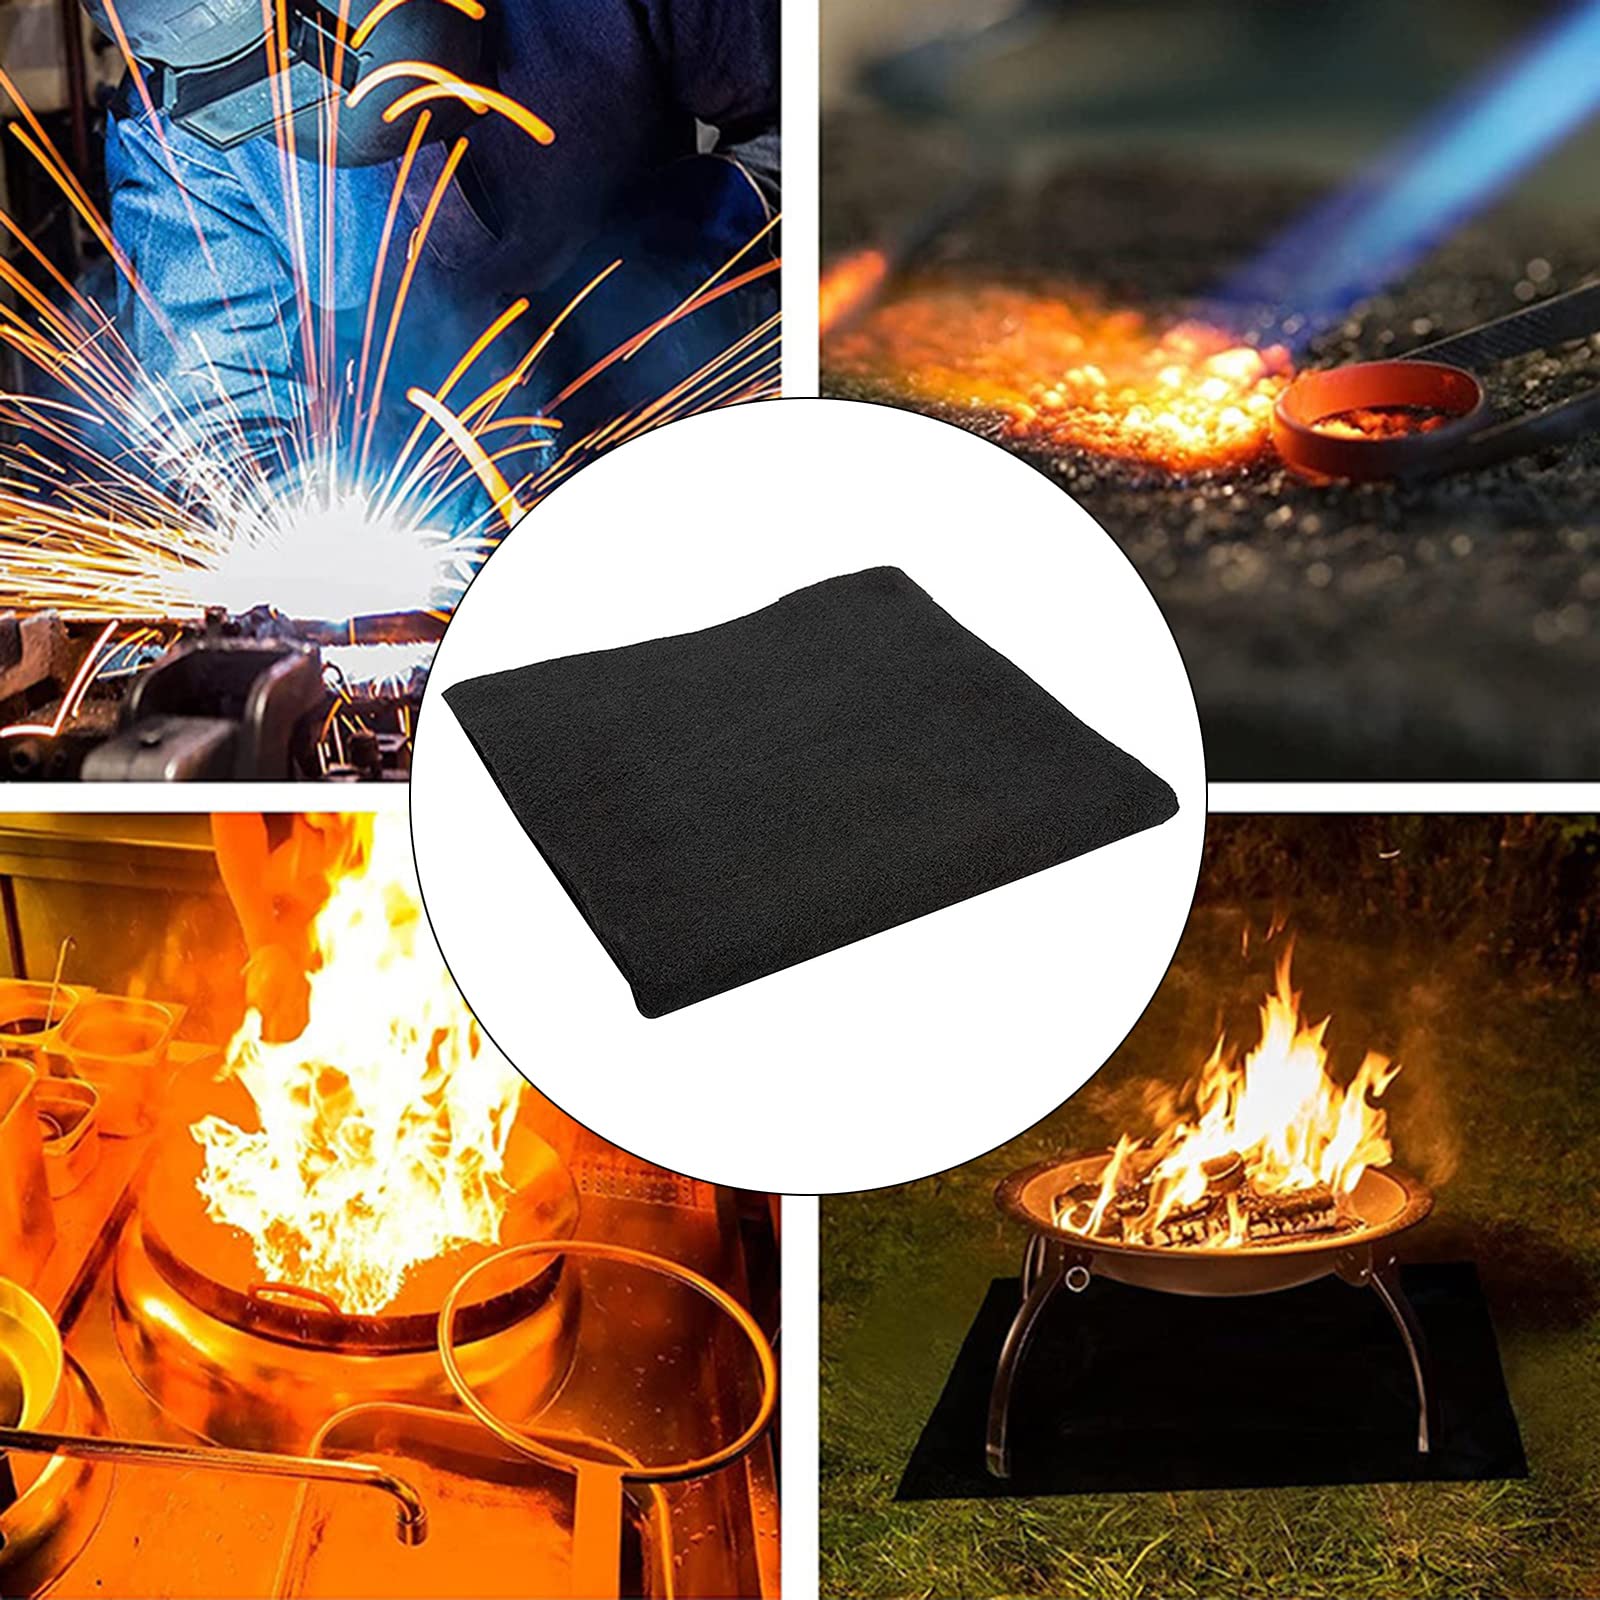 T-HOT High Temp Felt Carbon Fiber Welding Blanket Black Flame Resistant High Heat Fabric Mat Pad for Soldering Welder 12x12inch/36x36inch Insulated Welding Blanket Fireproof